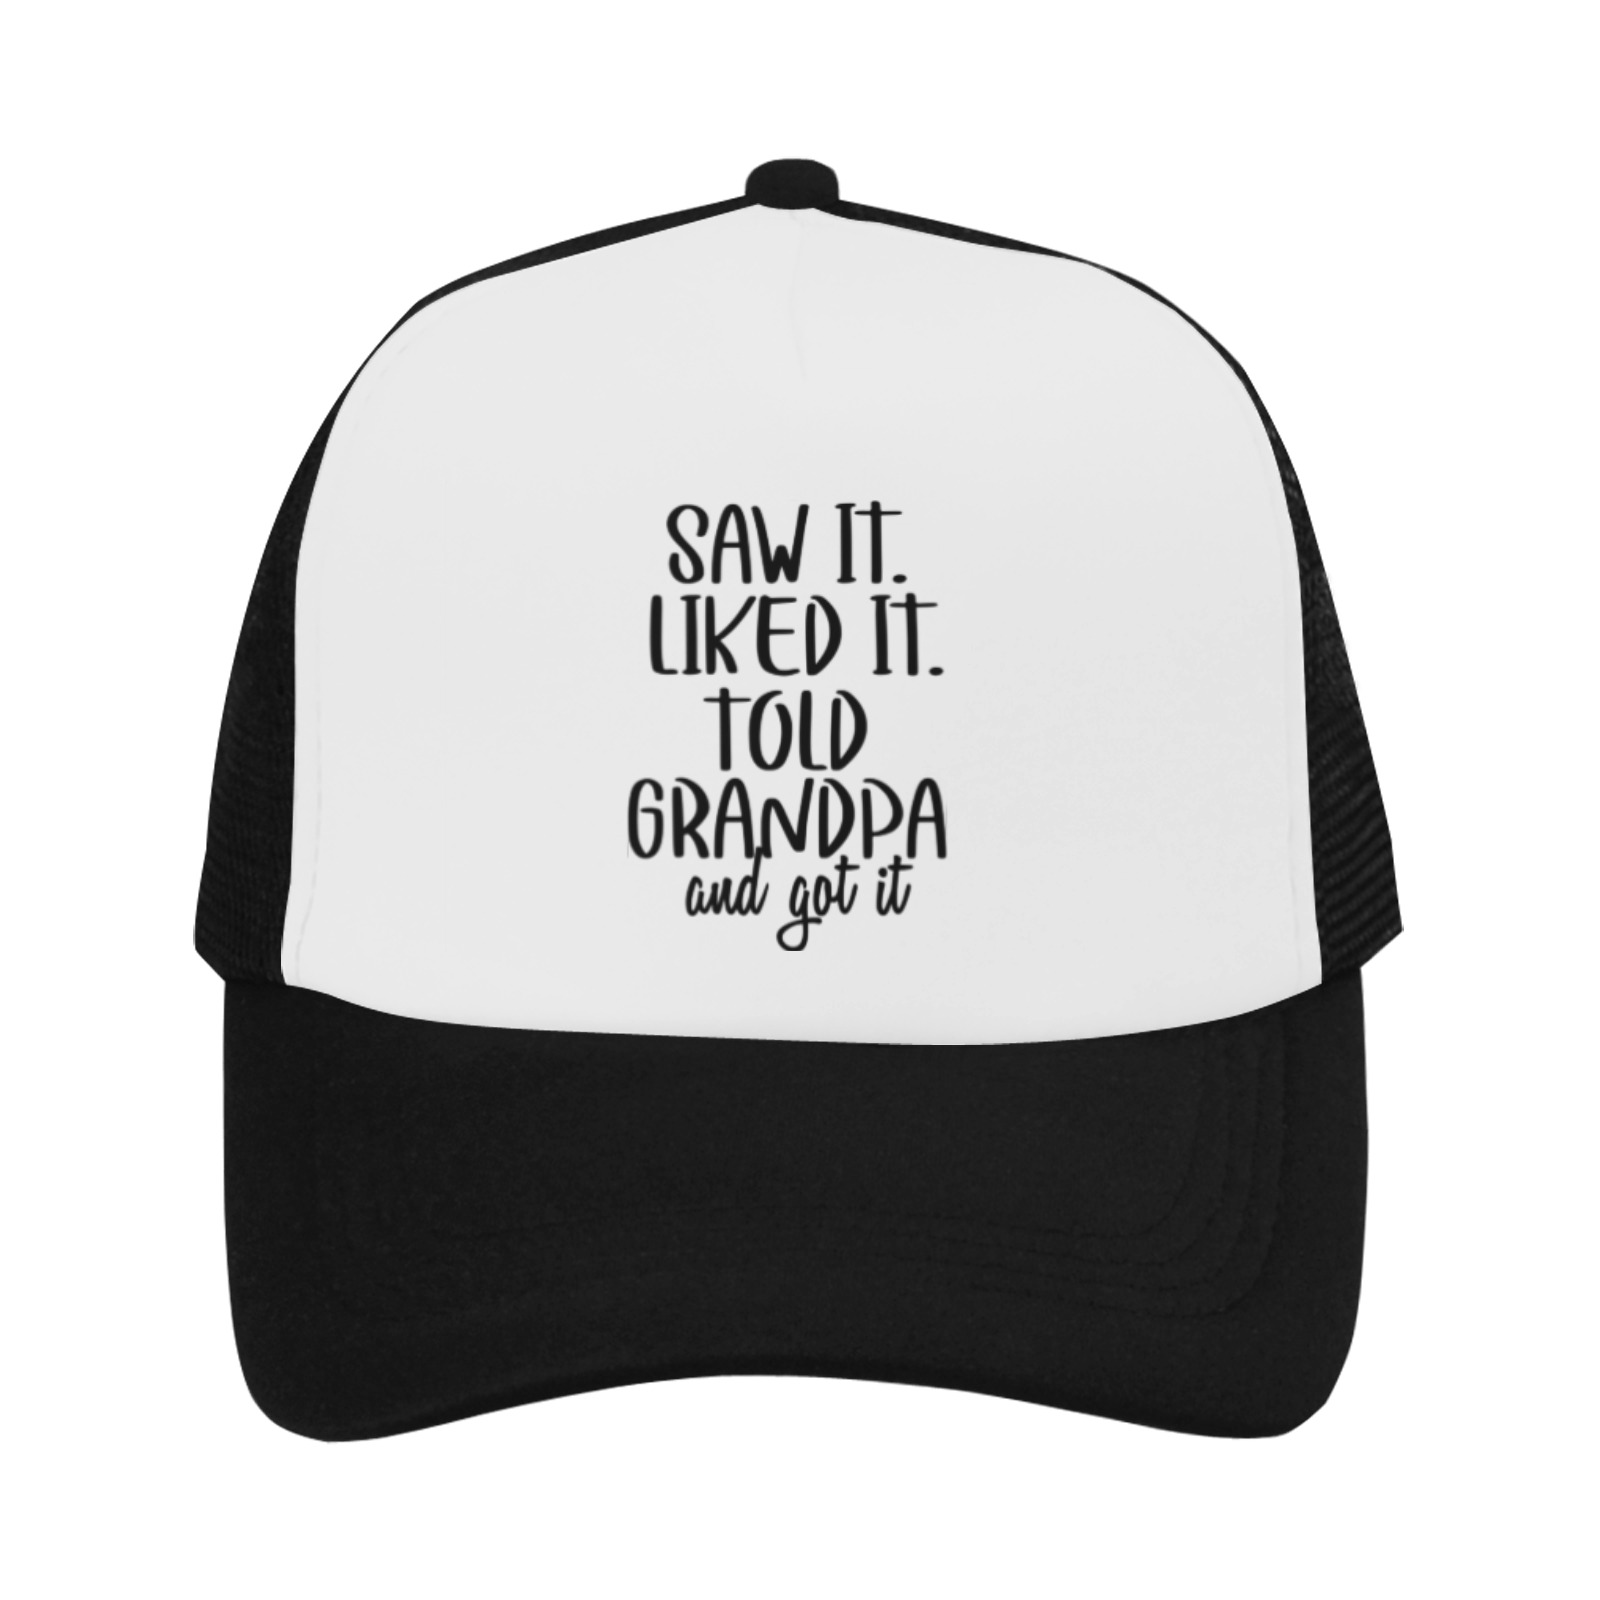 Told Grandpa And Got It Trucker Hat